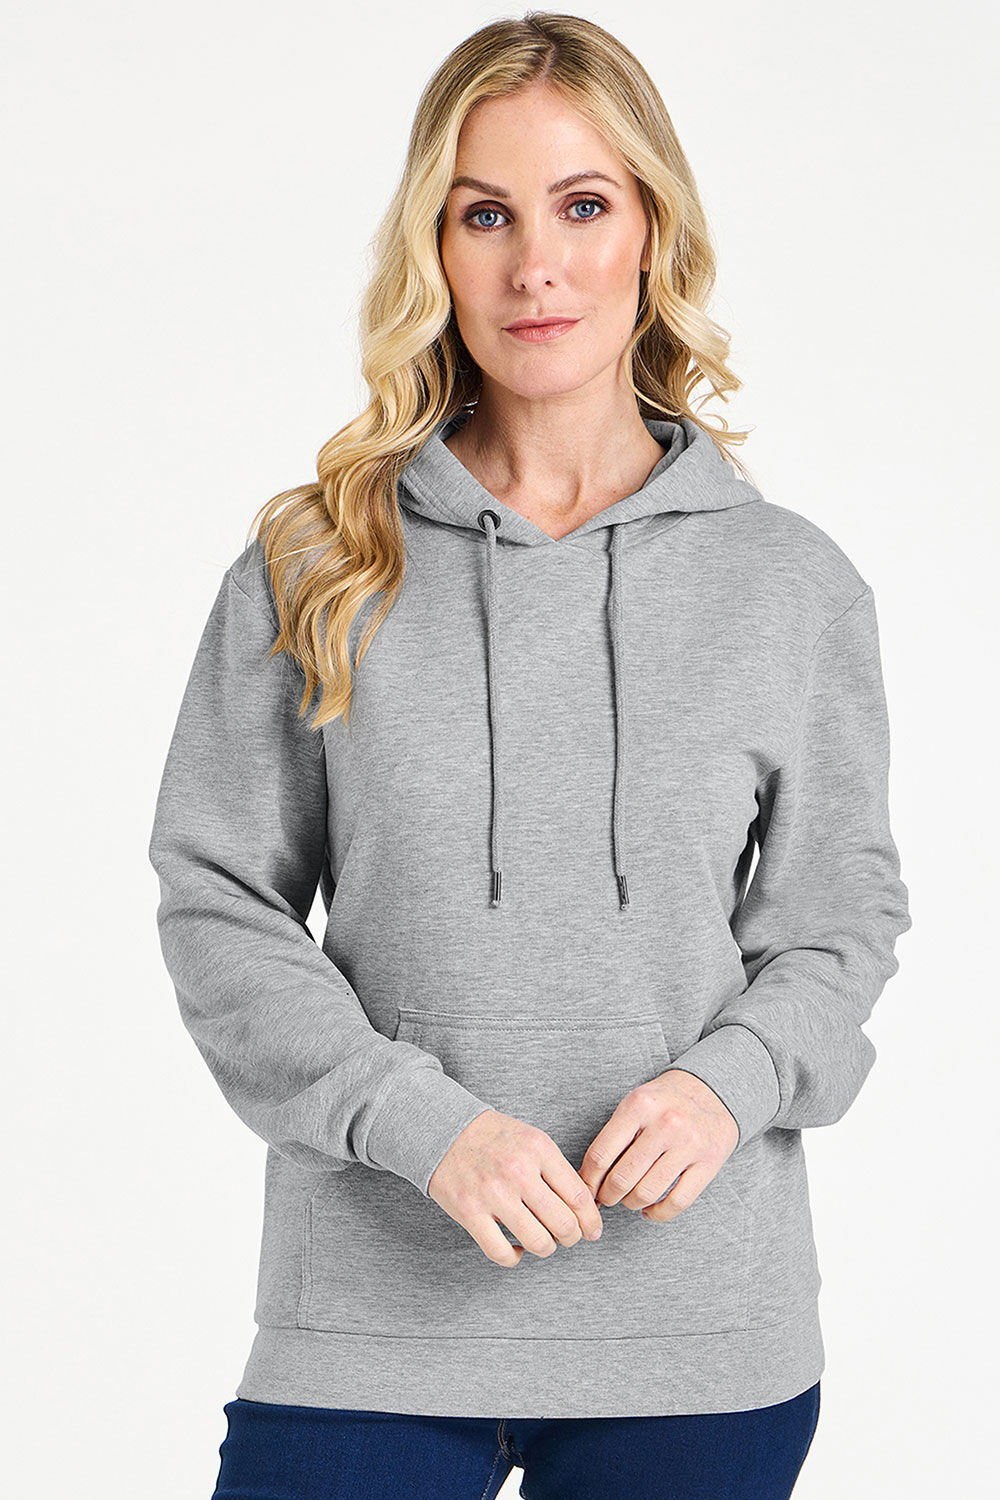 Brave Soul Grey - Long Sleeve Overhead Hooded Sweatshirt, Size: L